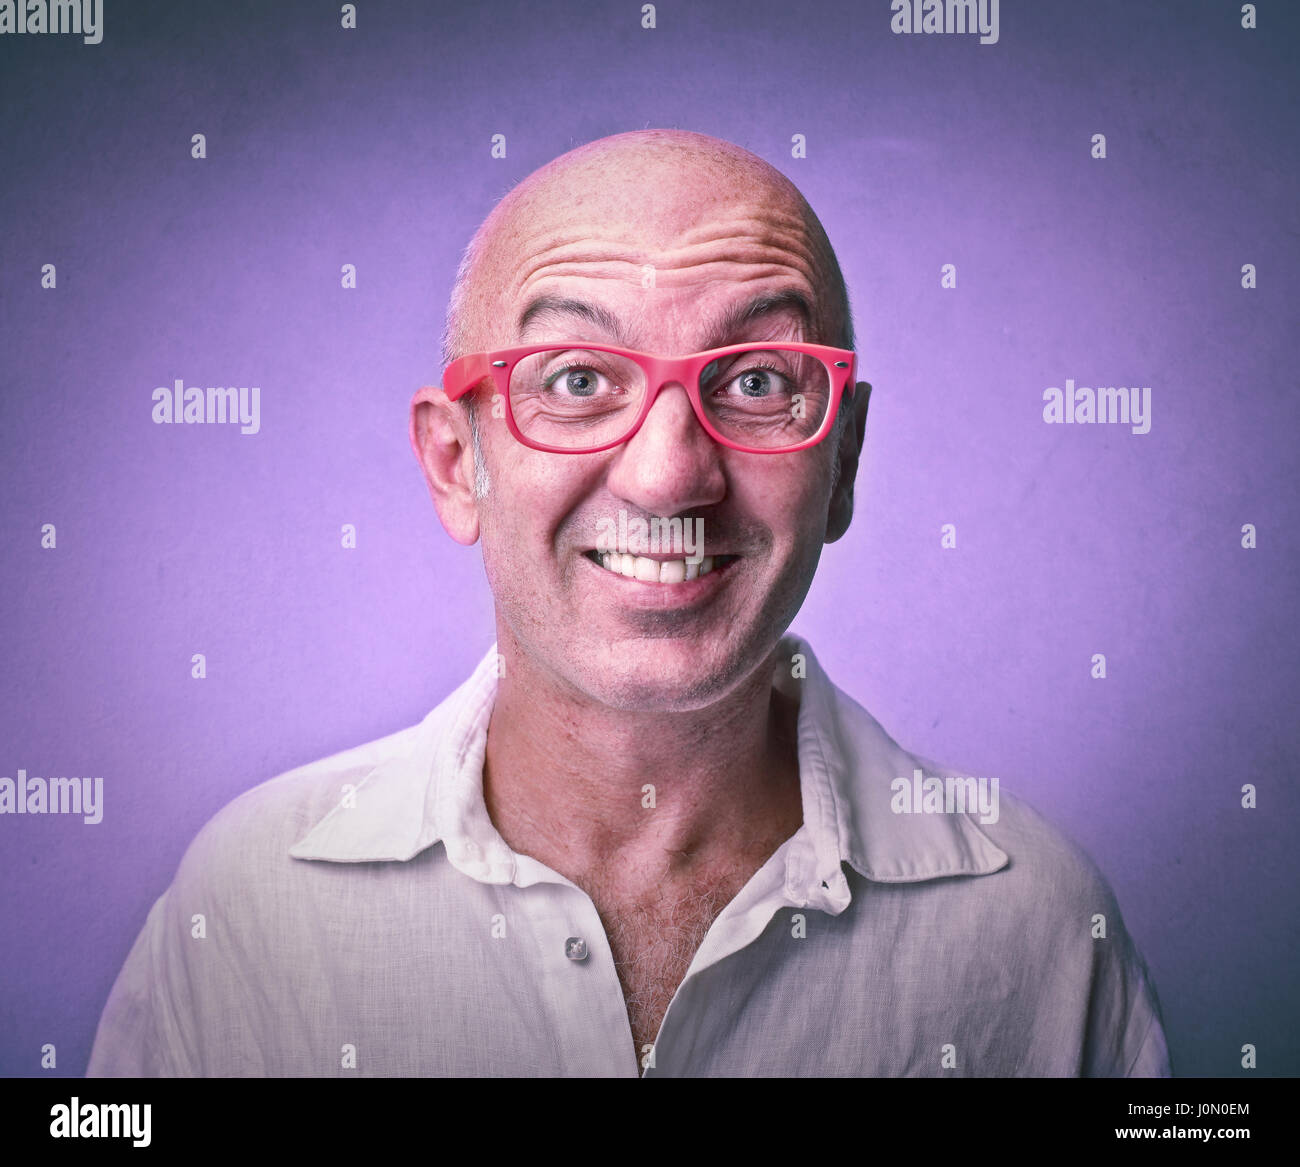 Bald man smiling Stock Photo